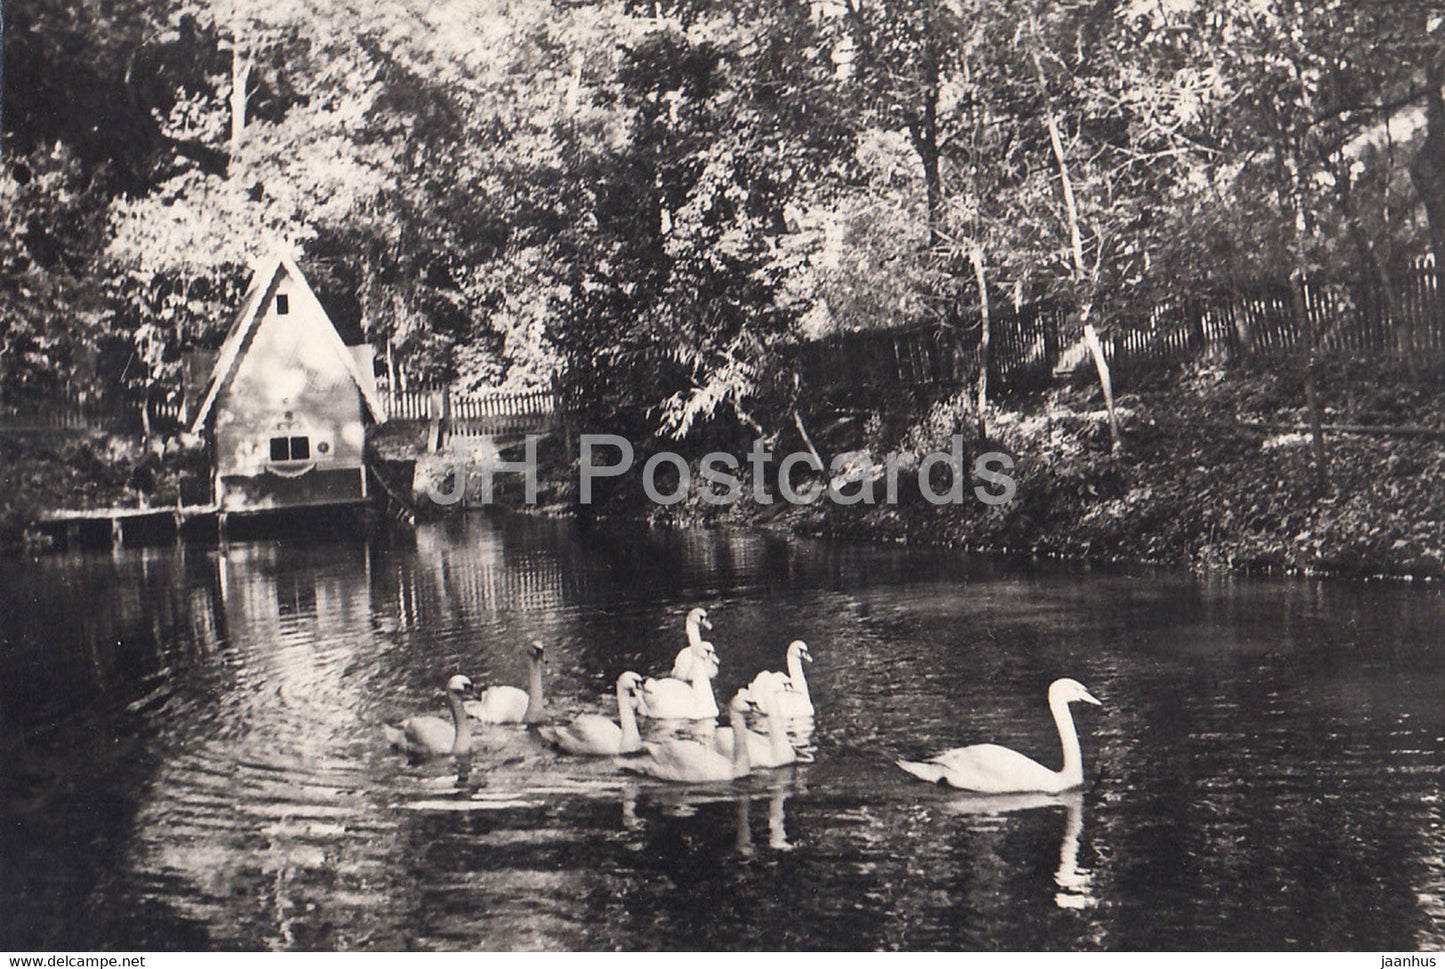 Gomel - Swan pond in Lunacharsky culture park - 1965 - Belarus USSR - unused - JH Postcards